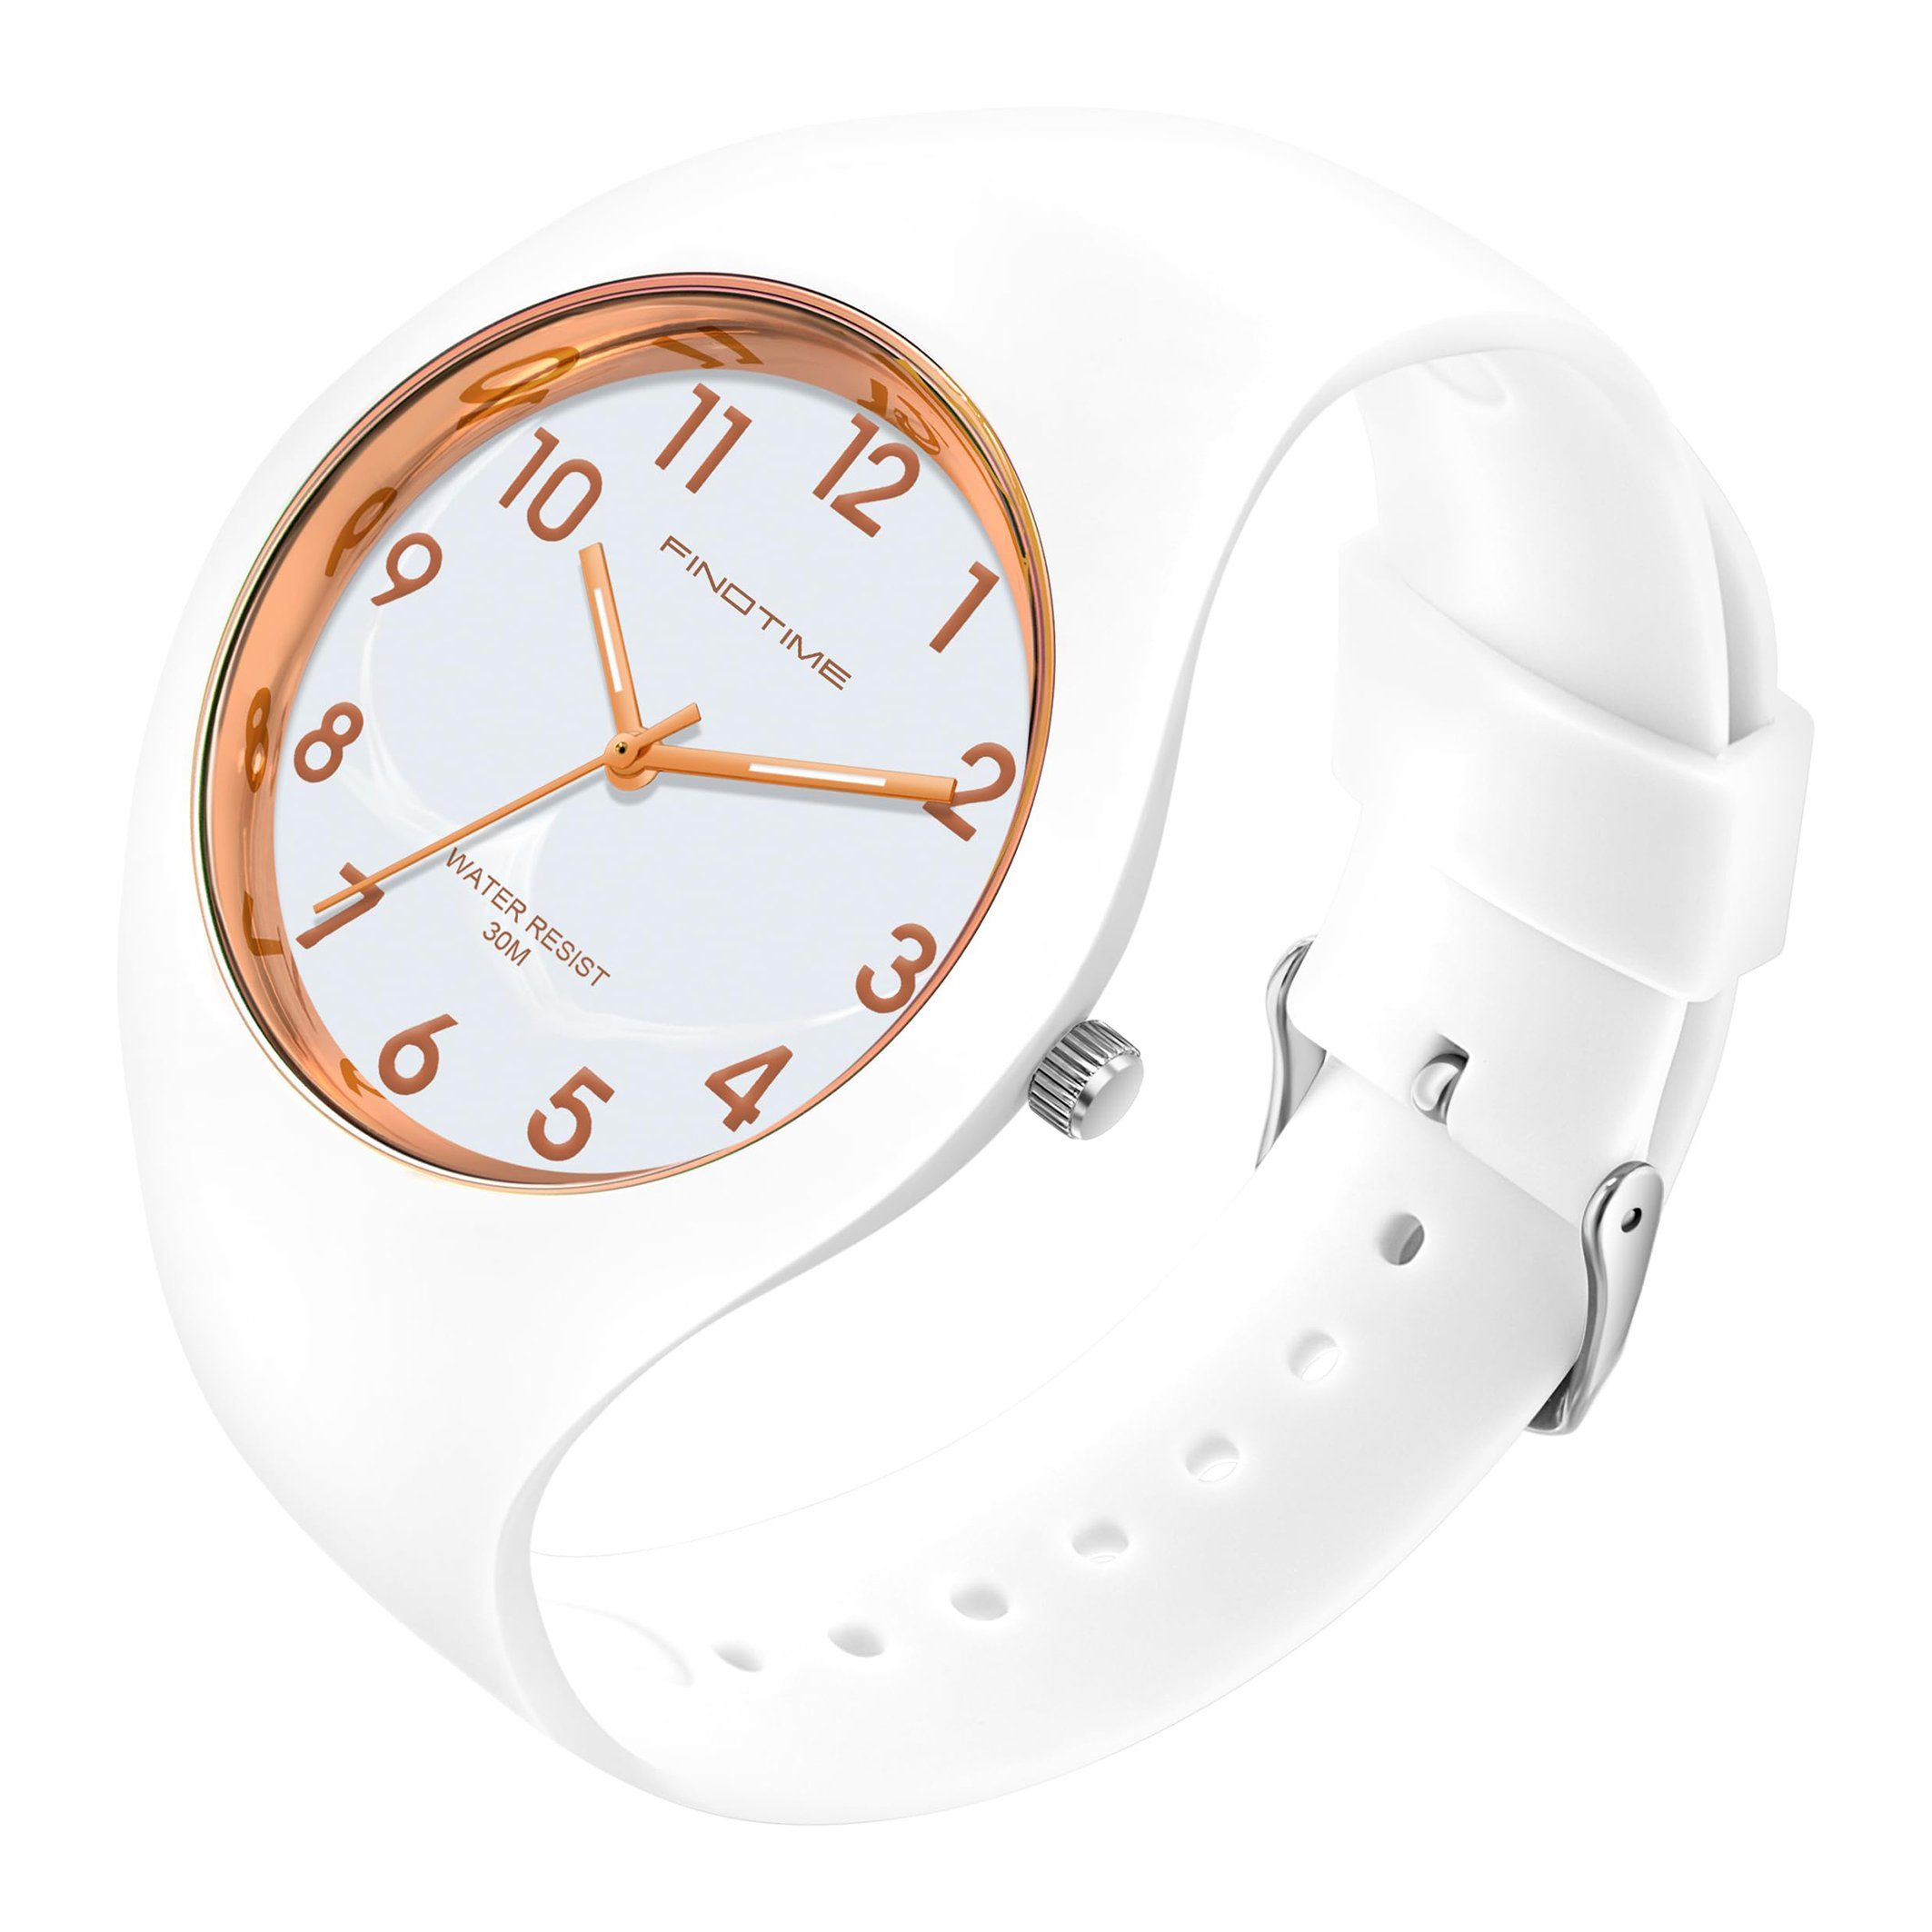 GelldG Uhr Armbanduhr Uhren analog Quarz mit Silikonarmband wasserdicht Sportuhr Gold, Weiß